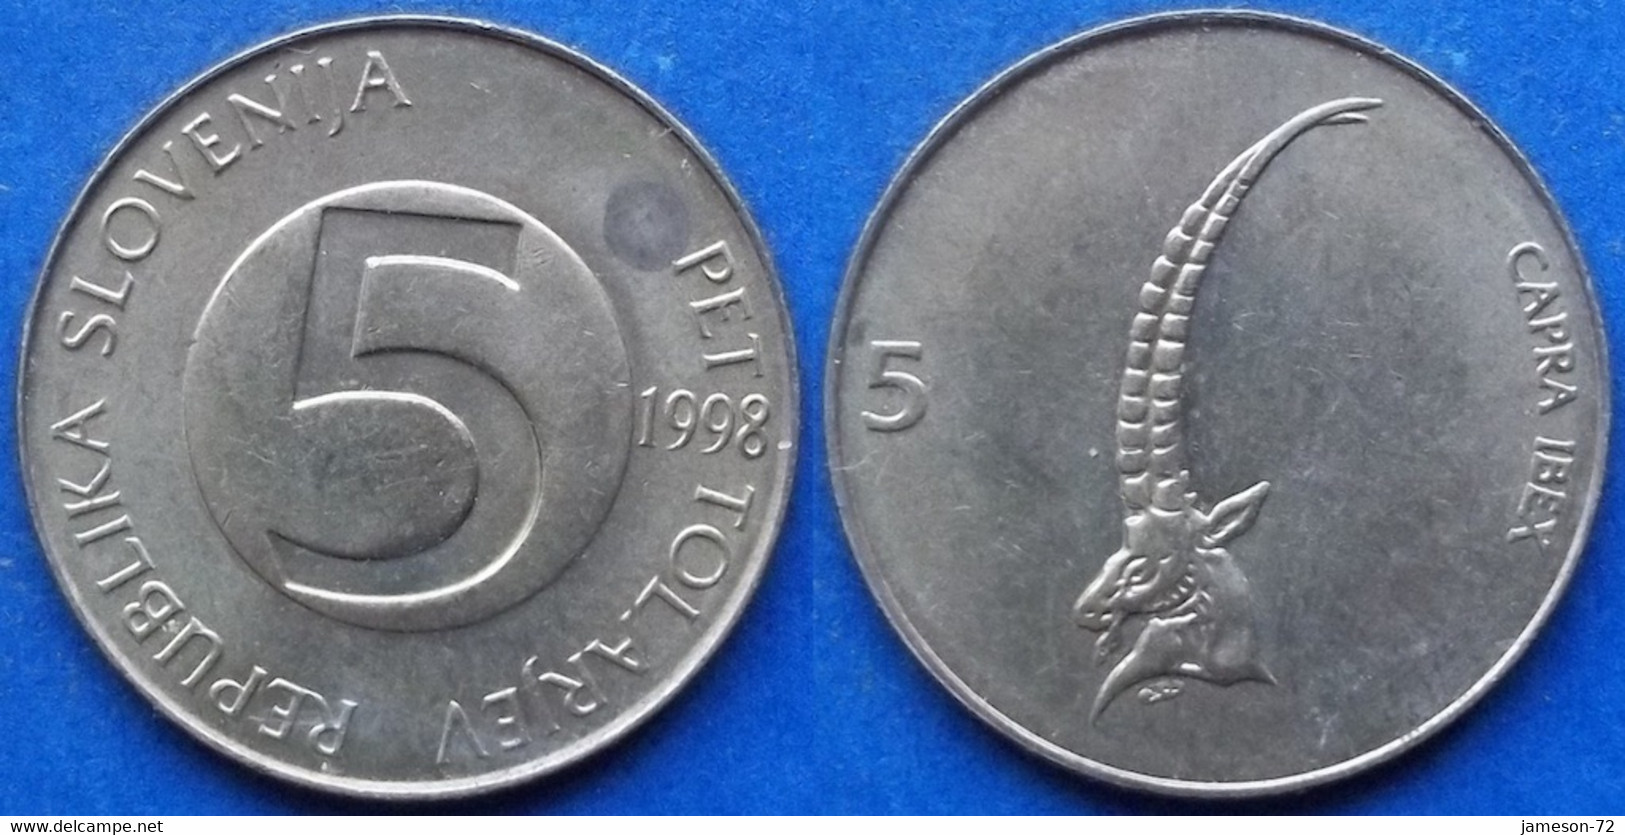 SLOVENIA - 5 Tolarjev 1998 "alpine Ibex" KM# 6 Republic Tolar Coinage (1991-2006) - Edelweiss Coins - Slovenia